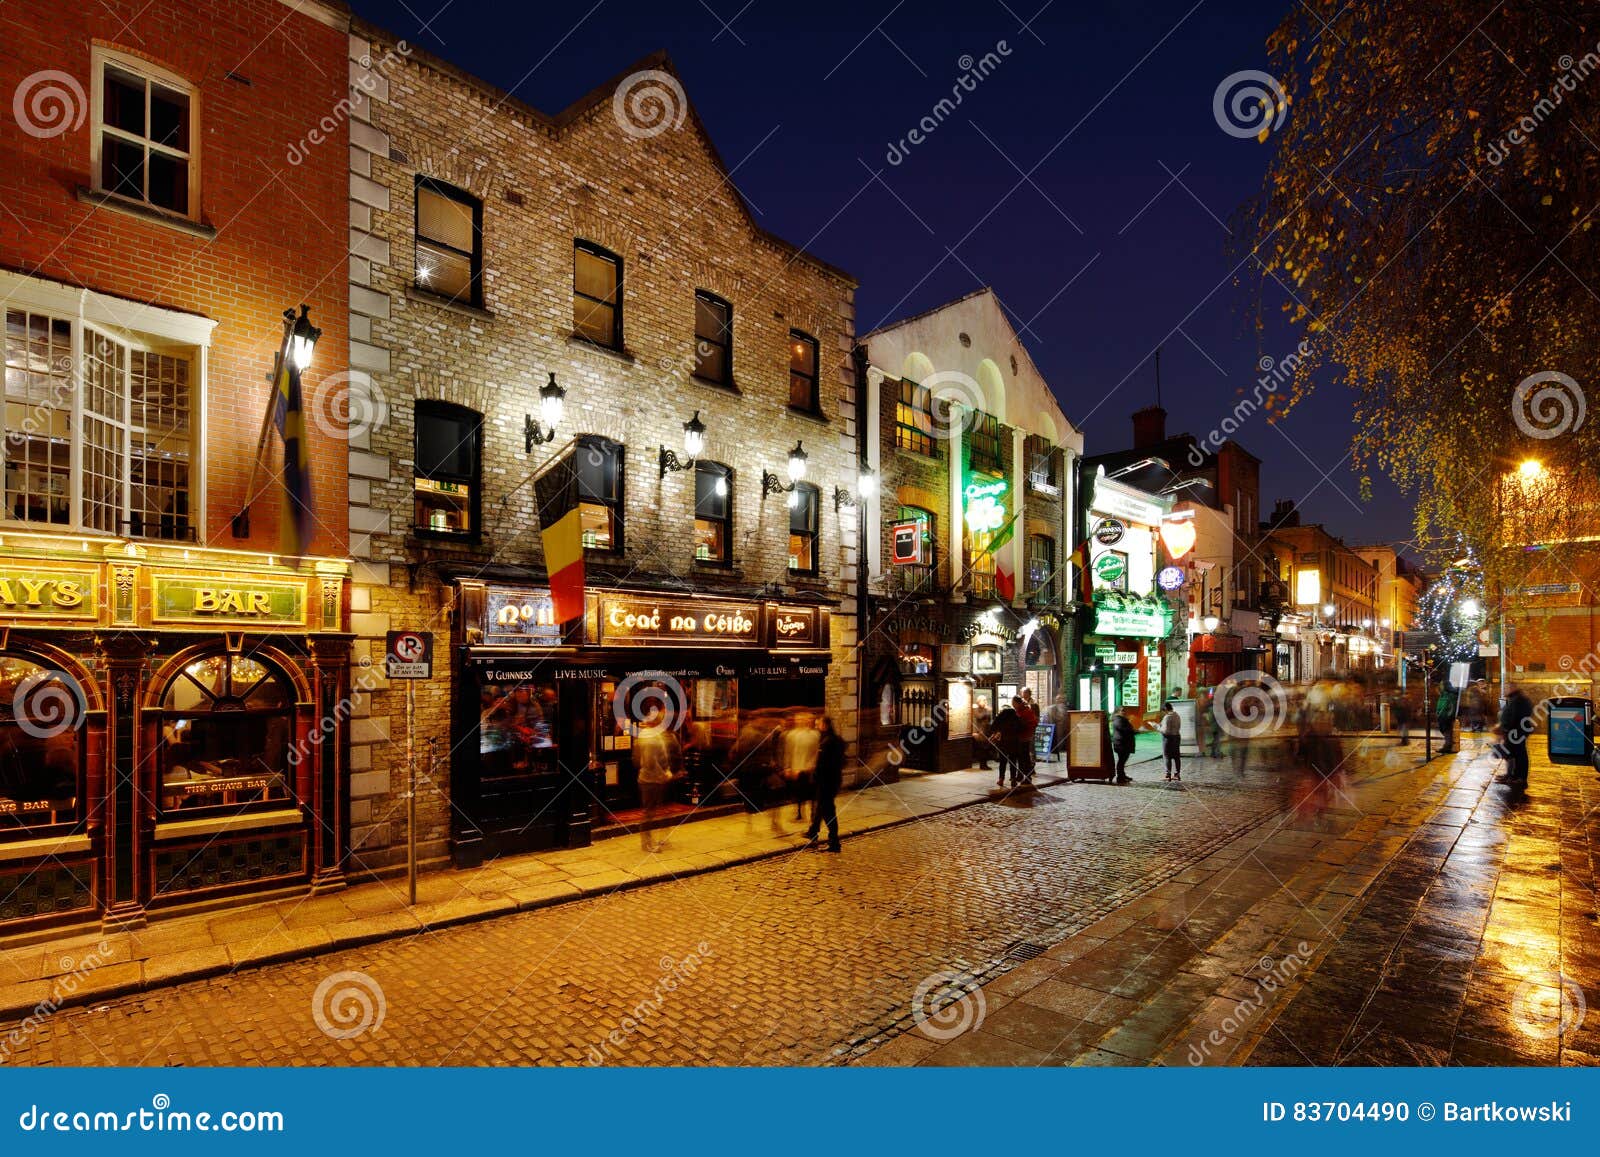 A Busy Nightlife Of The Temple  Bar  Area  Of Dublin  Ireland  